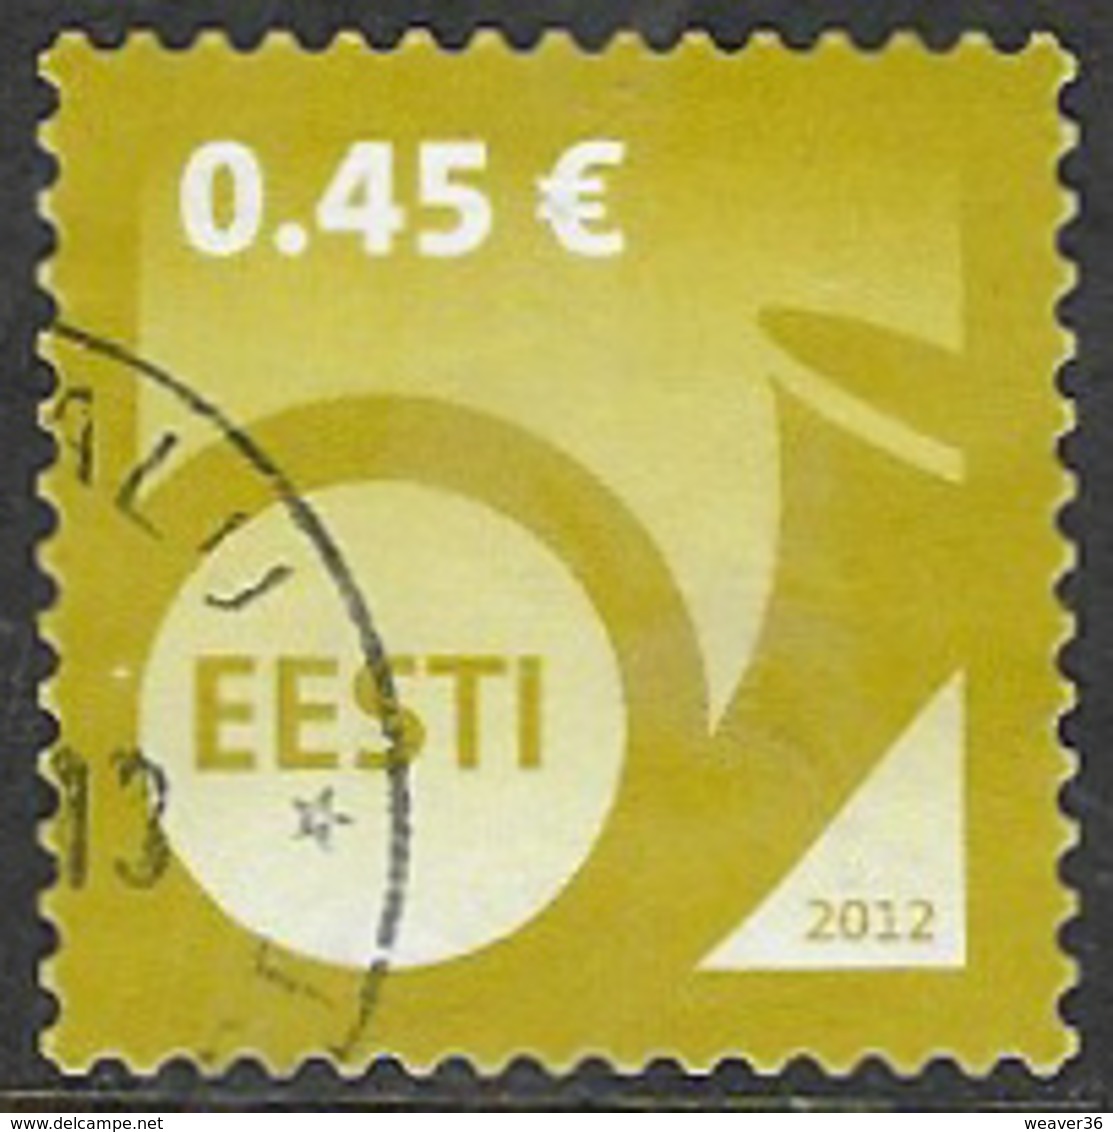 Estonia 2012 Definitive 45c Good/fine Used [38/31494/ND] - Estonia